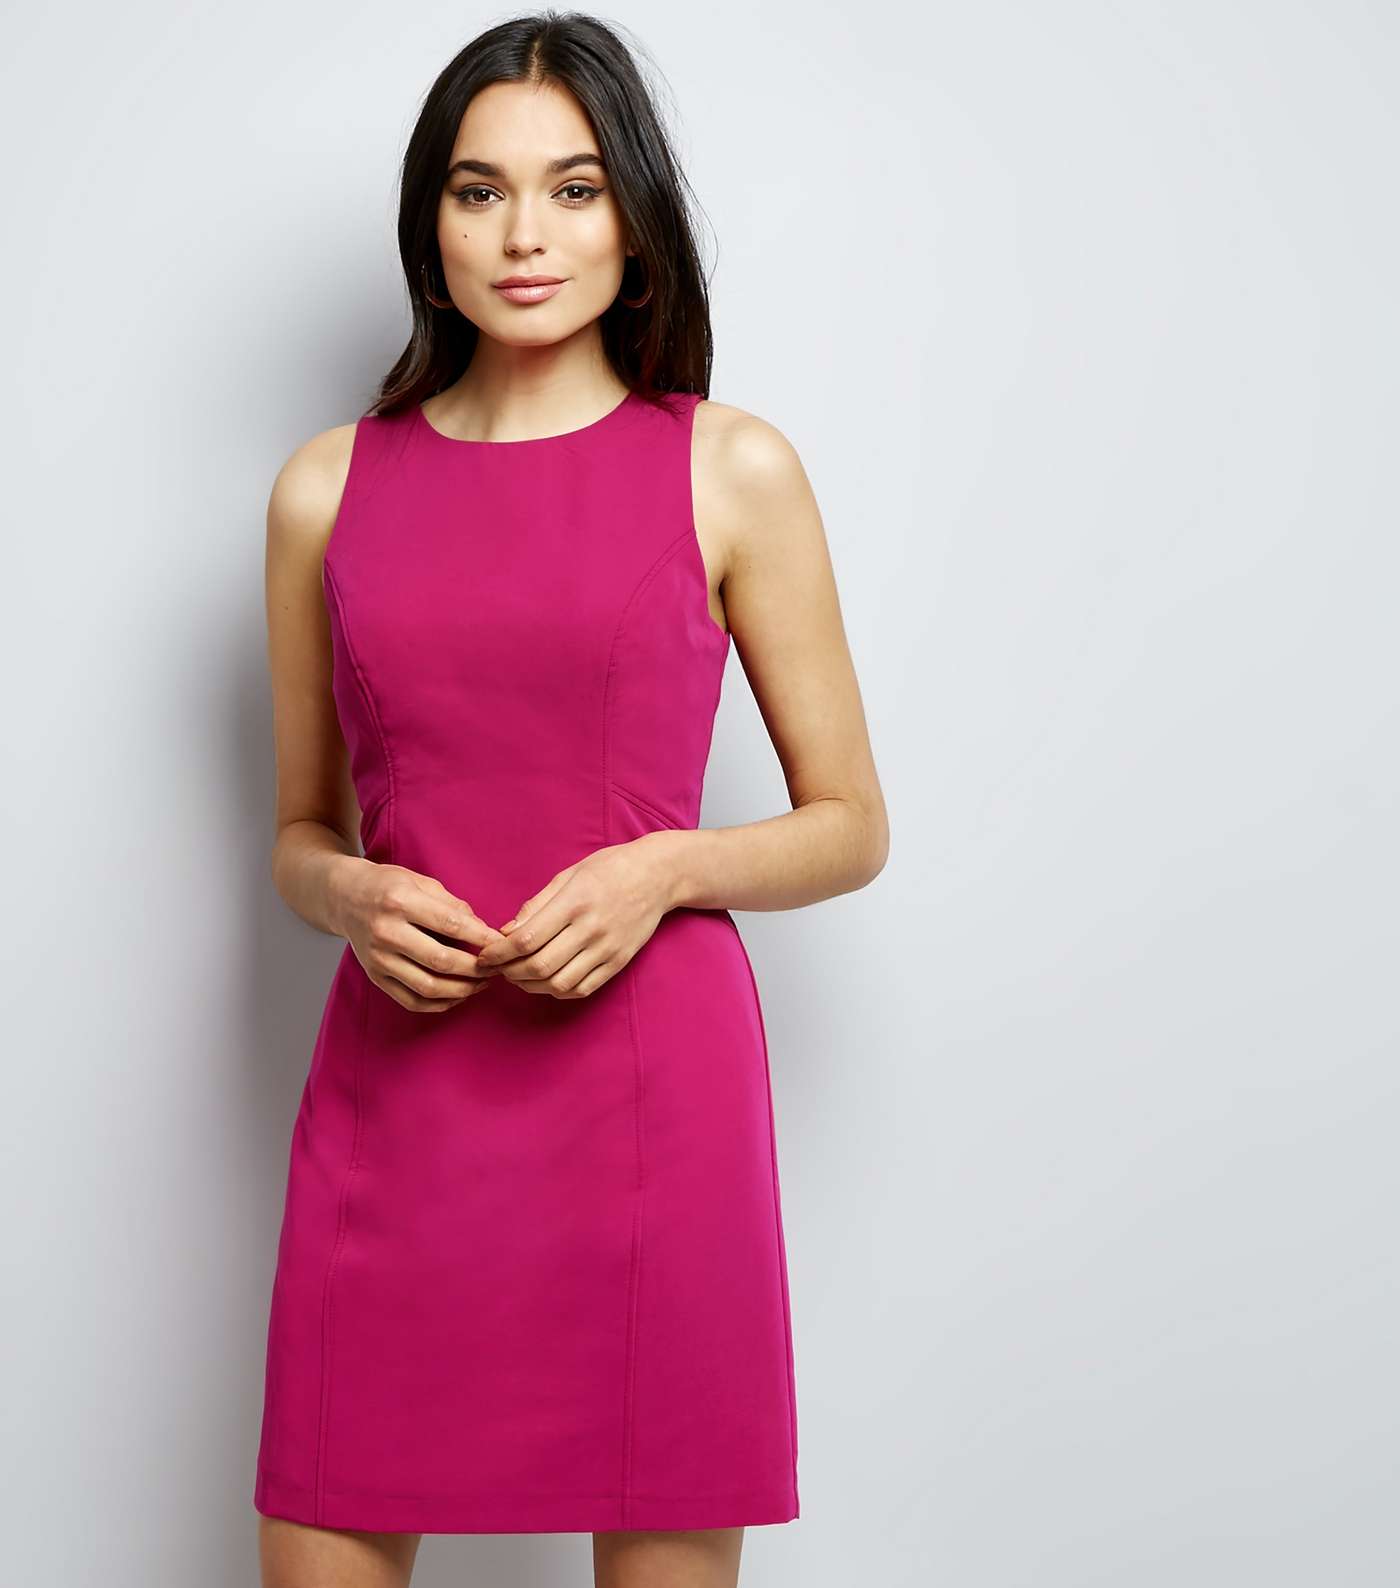 Bright Pink Suit Dress